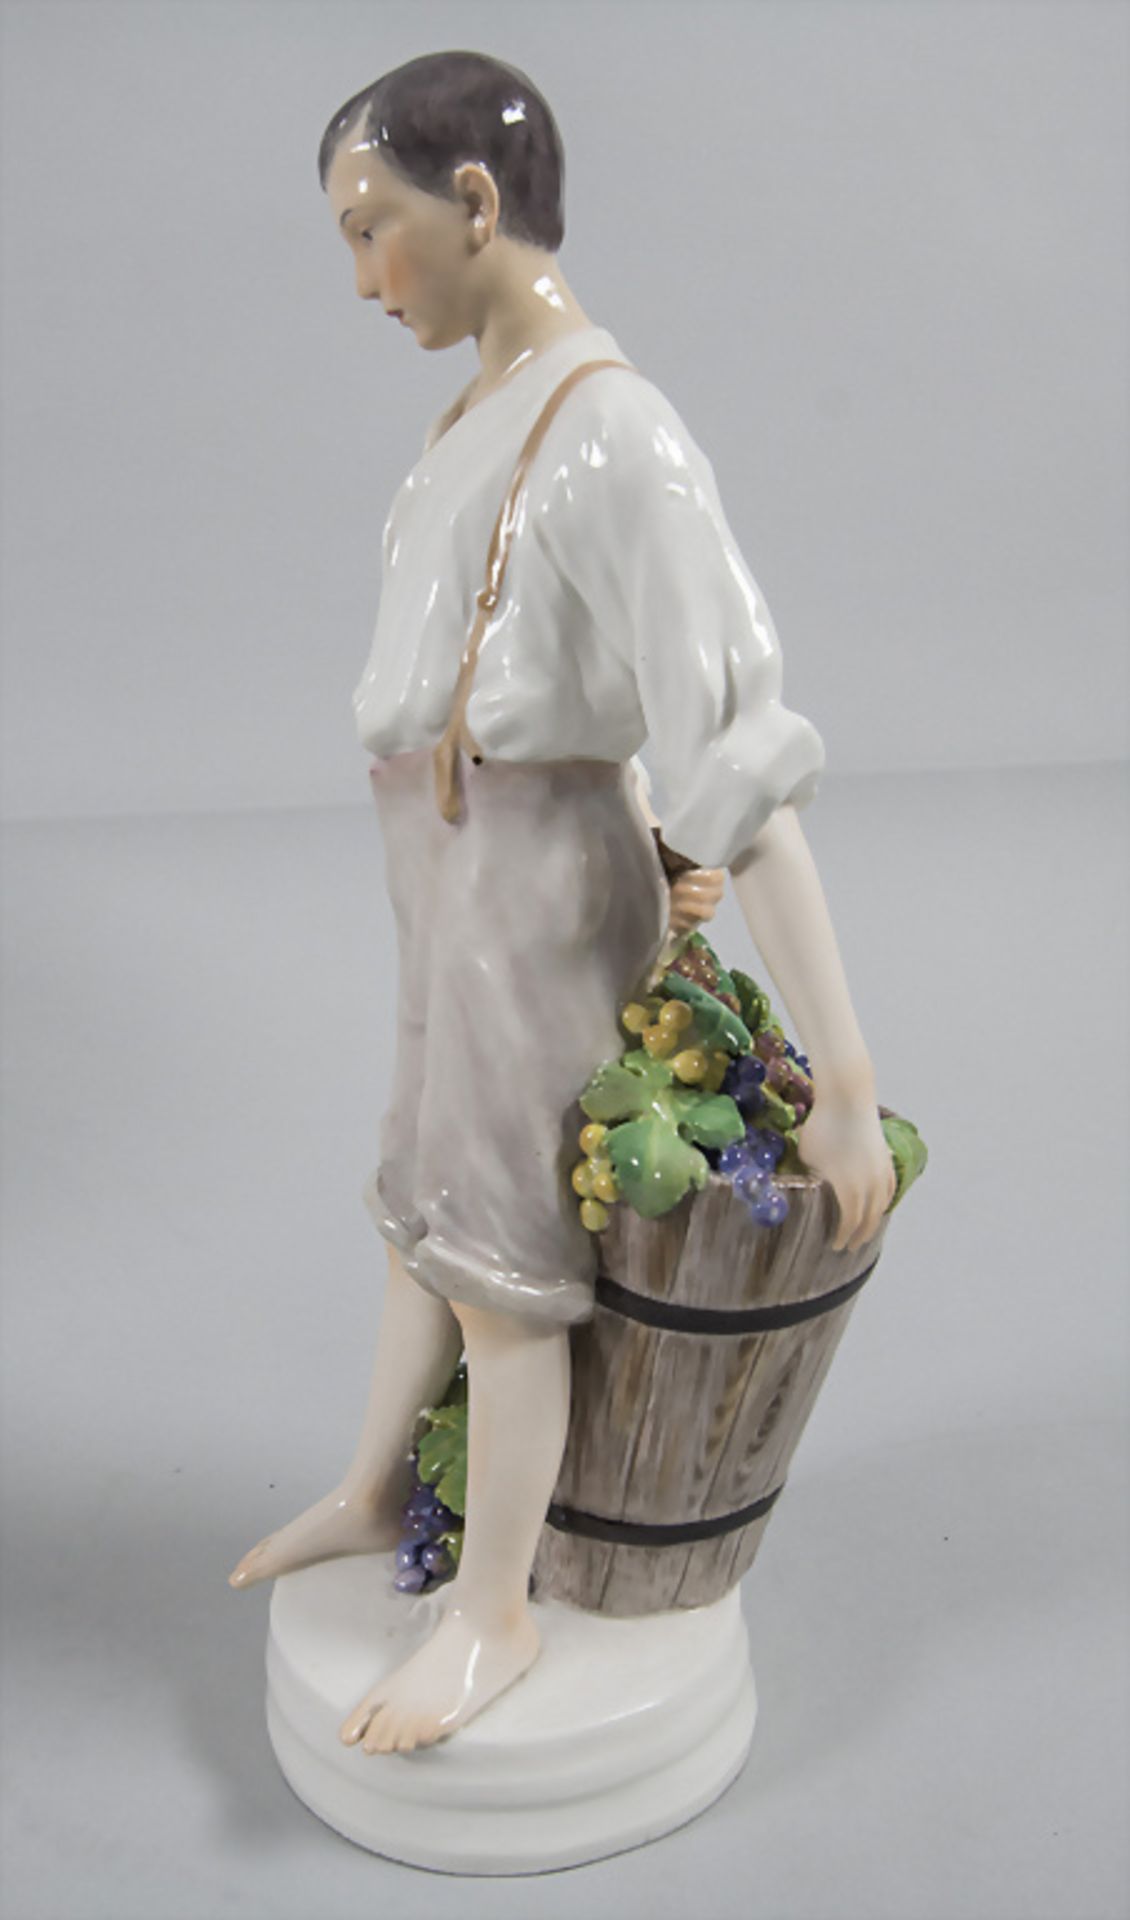 Jugendstil Figur 'Winzerknabe' / An Art Nouveau figurine of a young winemaker, Theodor ... - Image 2 of 5